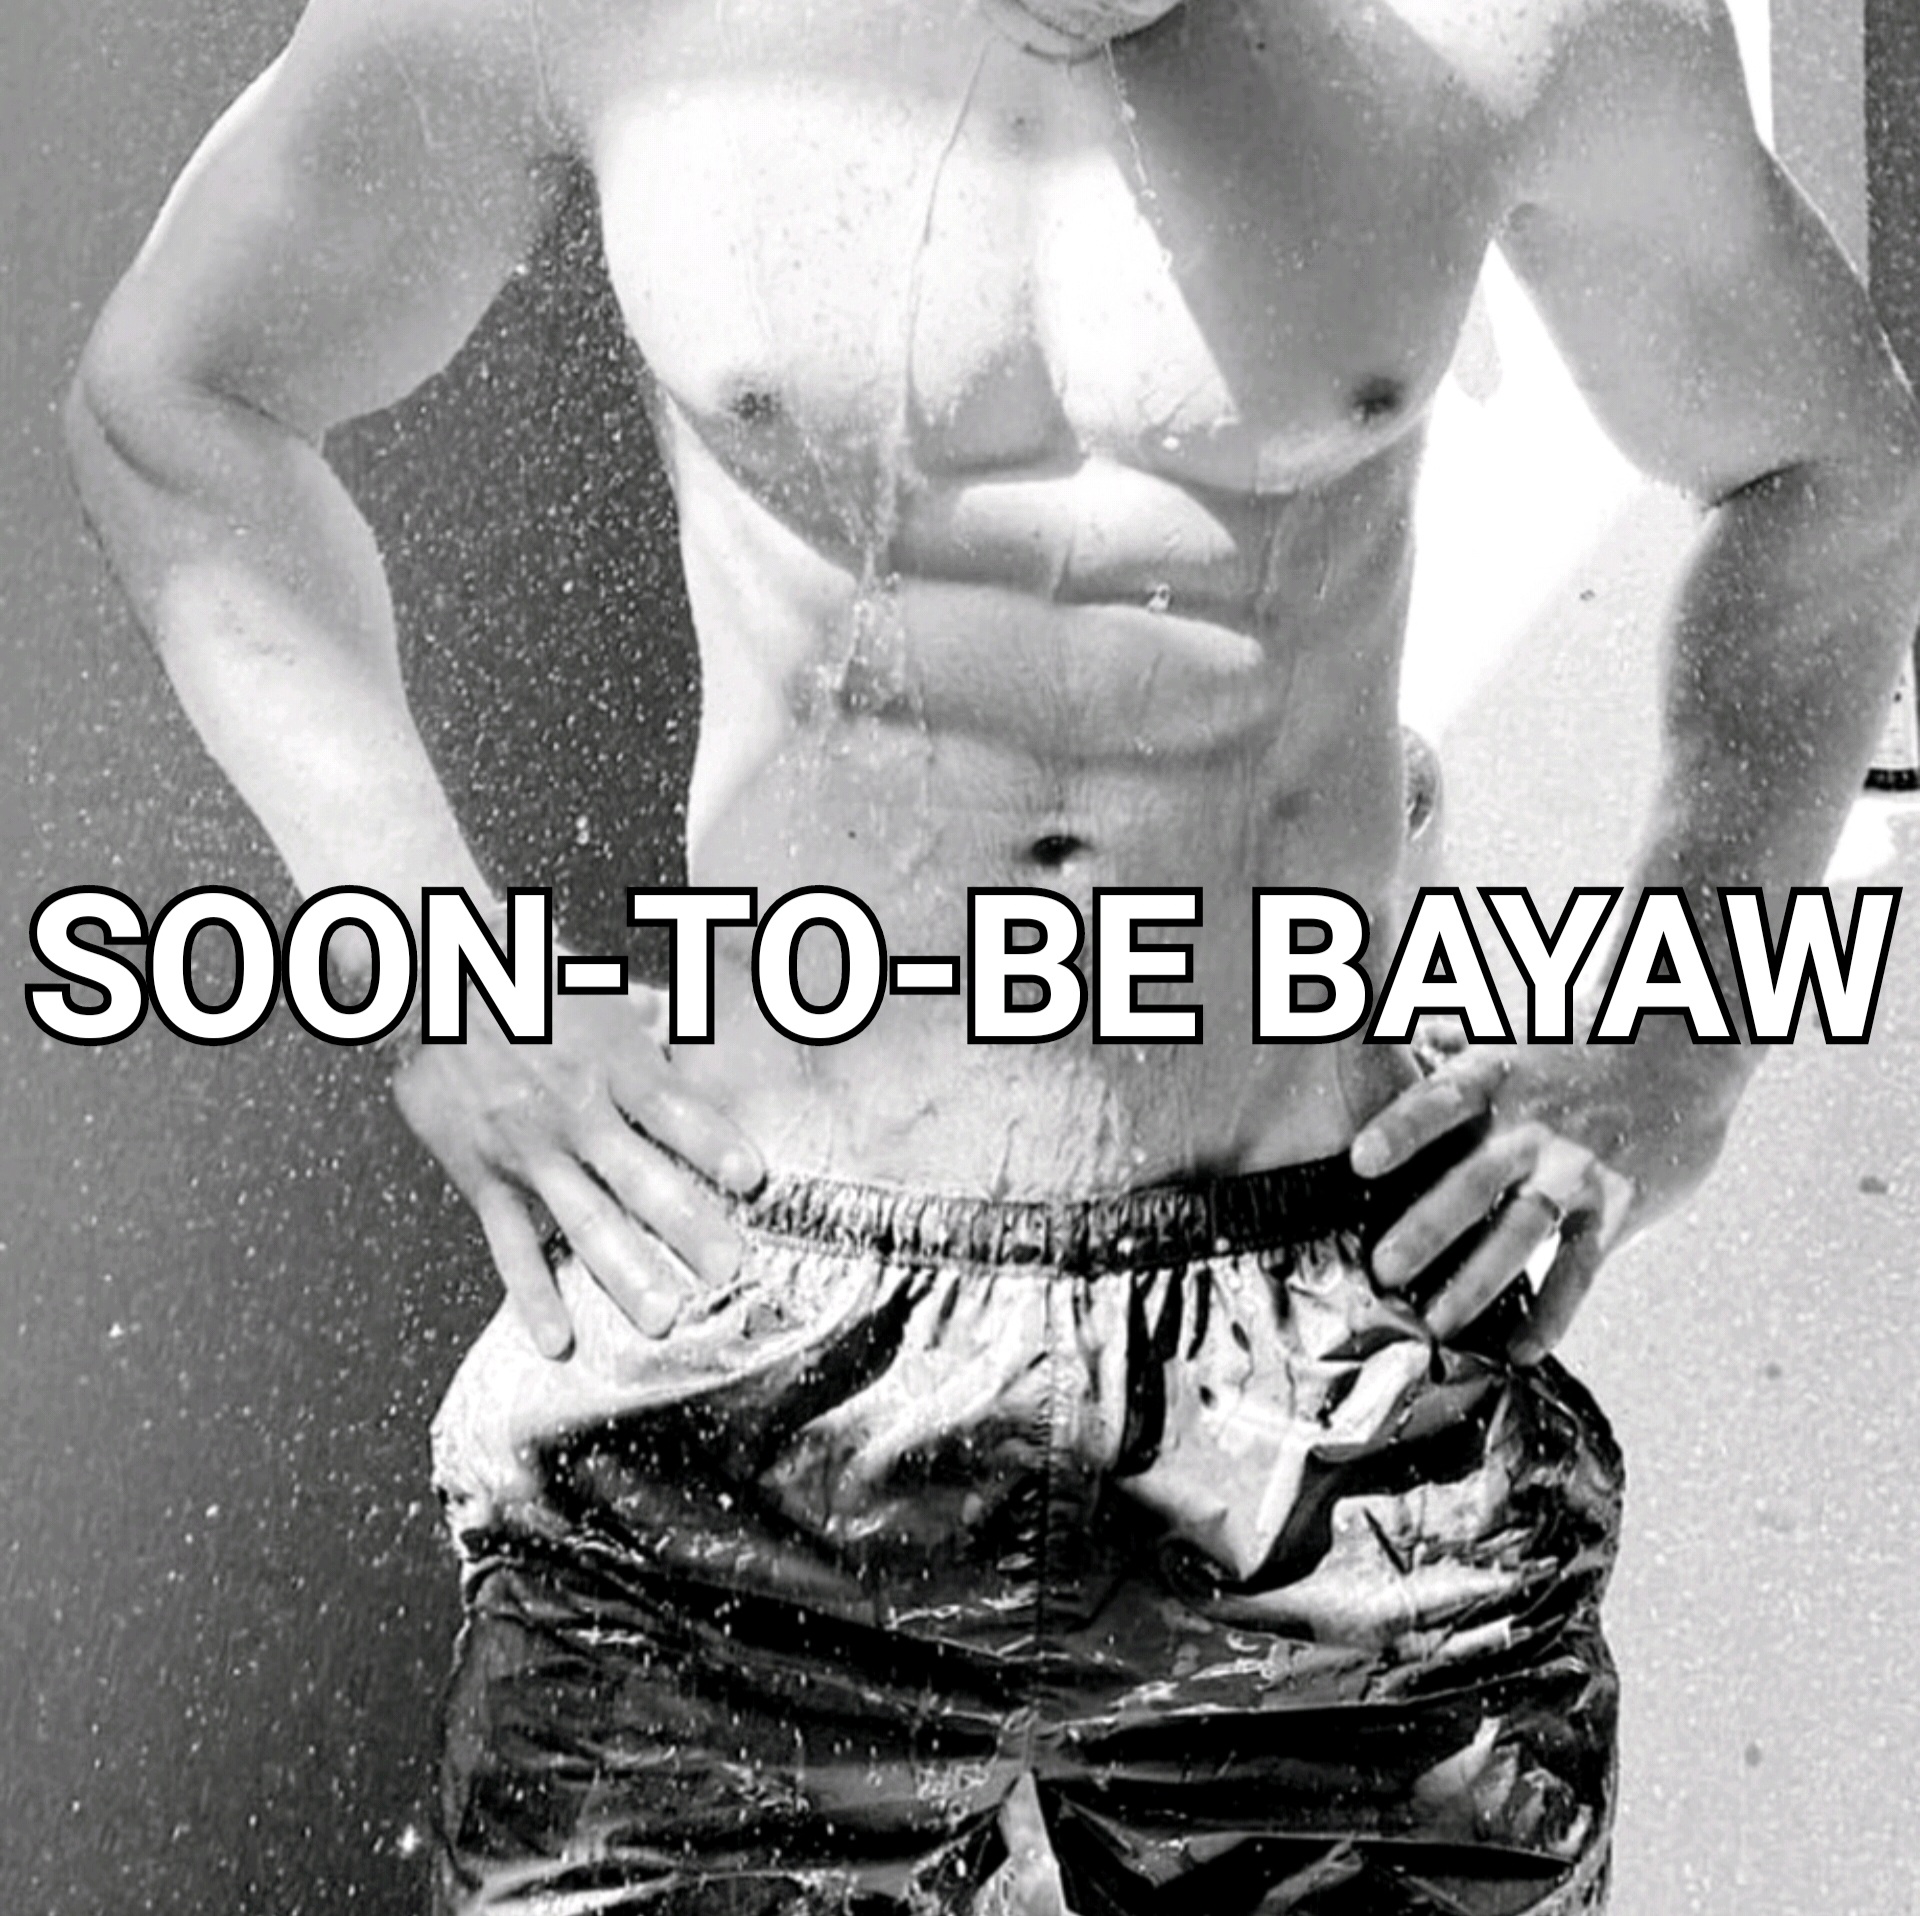 Soon-to-be Bayaw